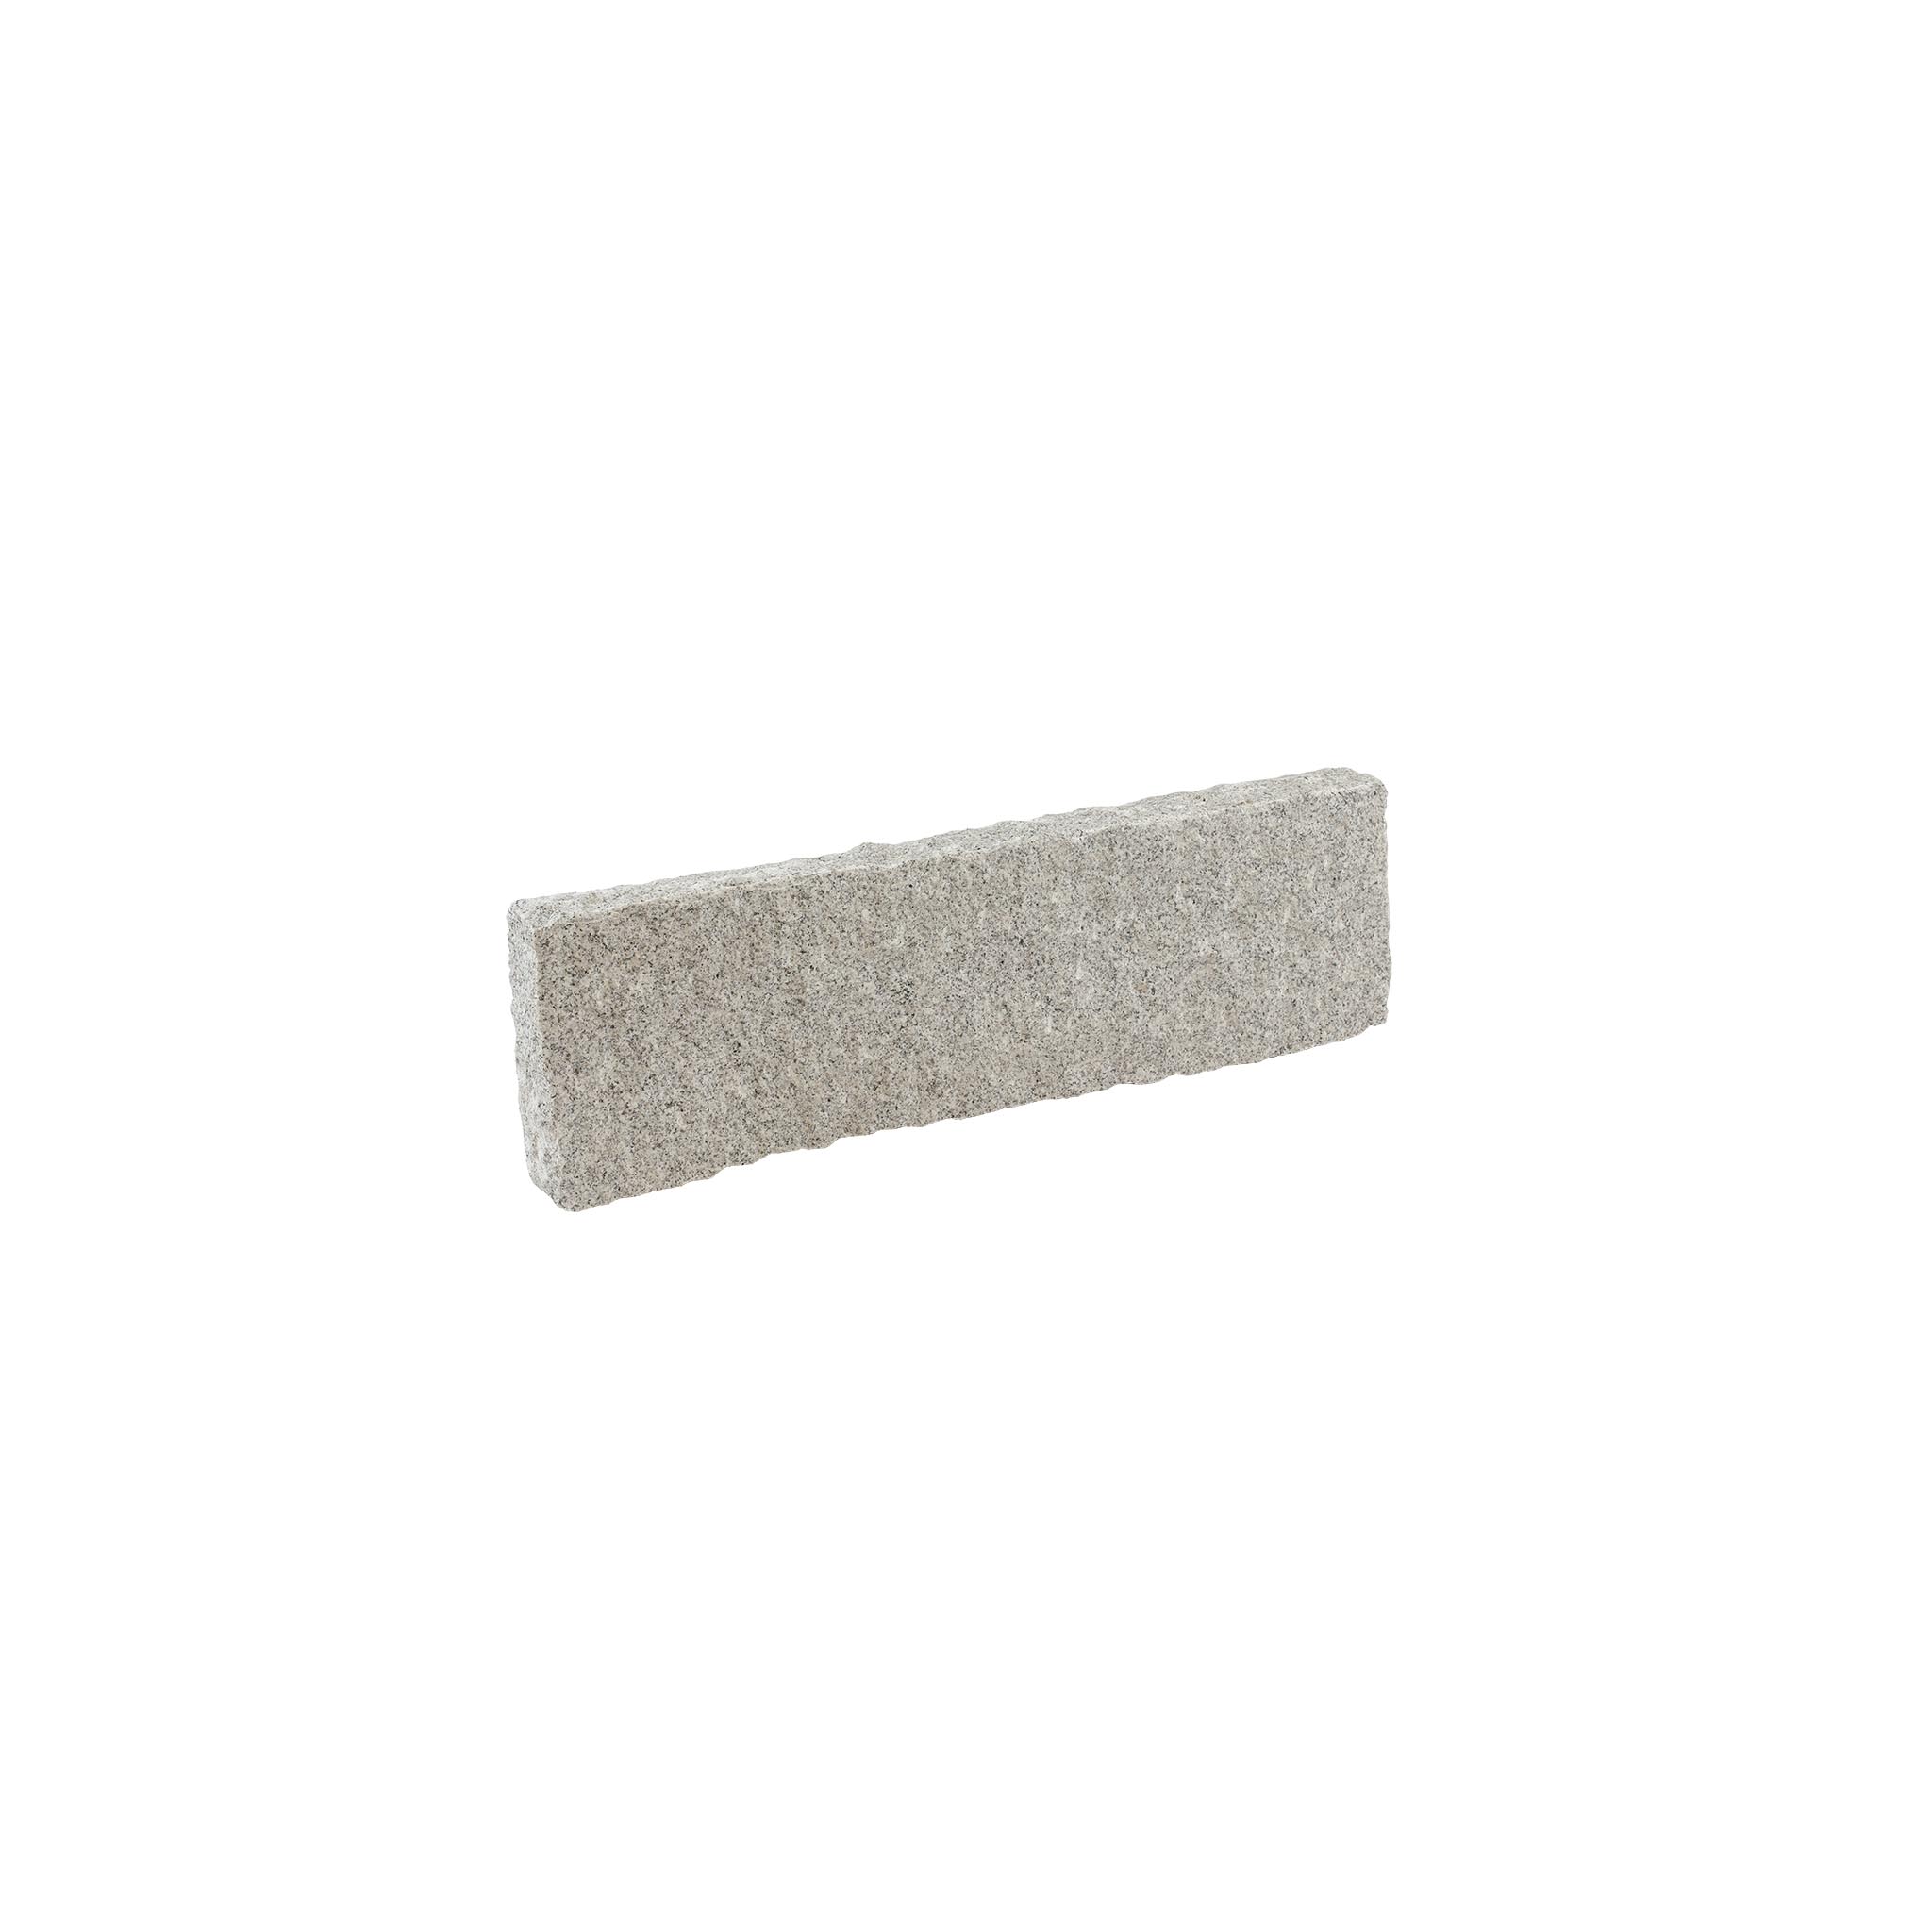 Palisaden, Granit grau (Pina) grob gestockt, Granit Palisade, 7 x 25 x 75 cm, G603, grau, grob gestockt